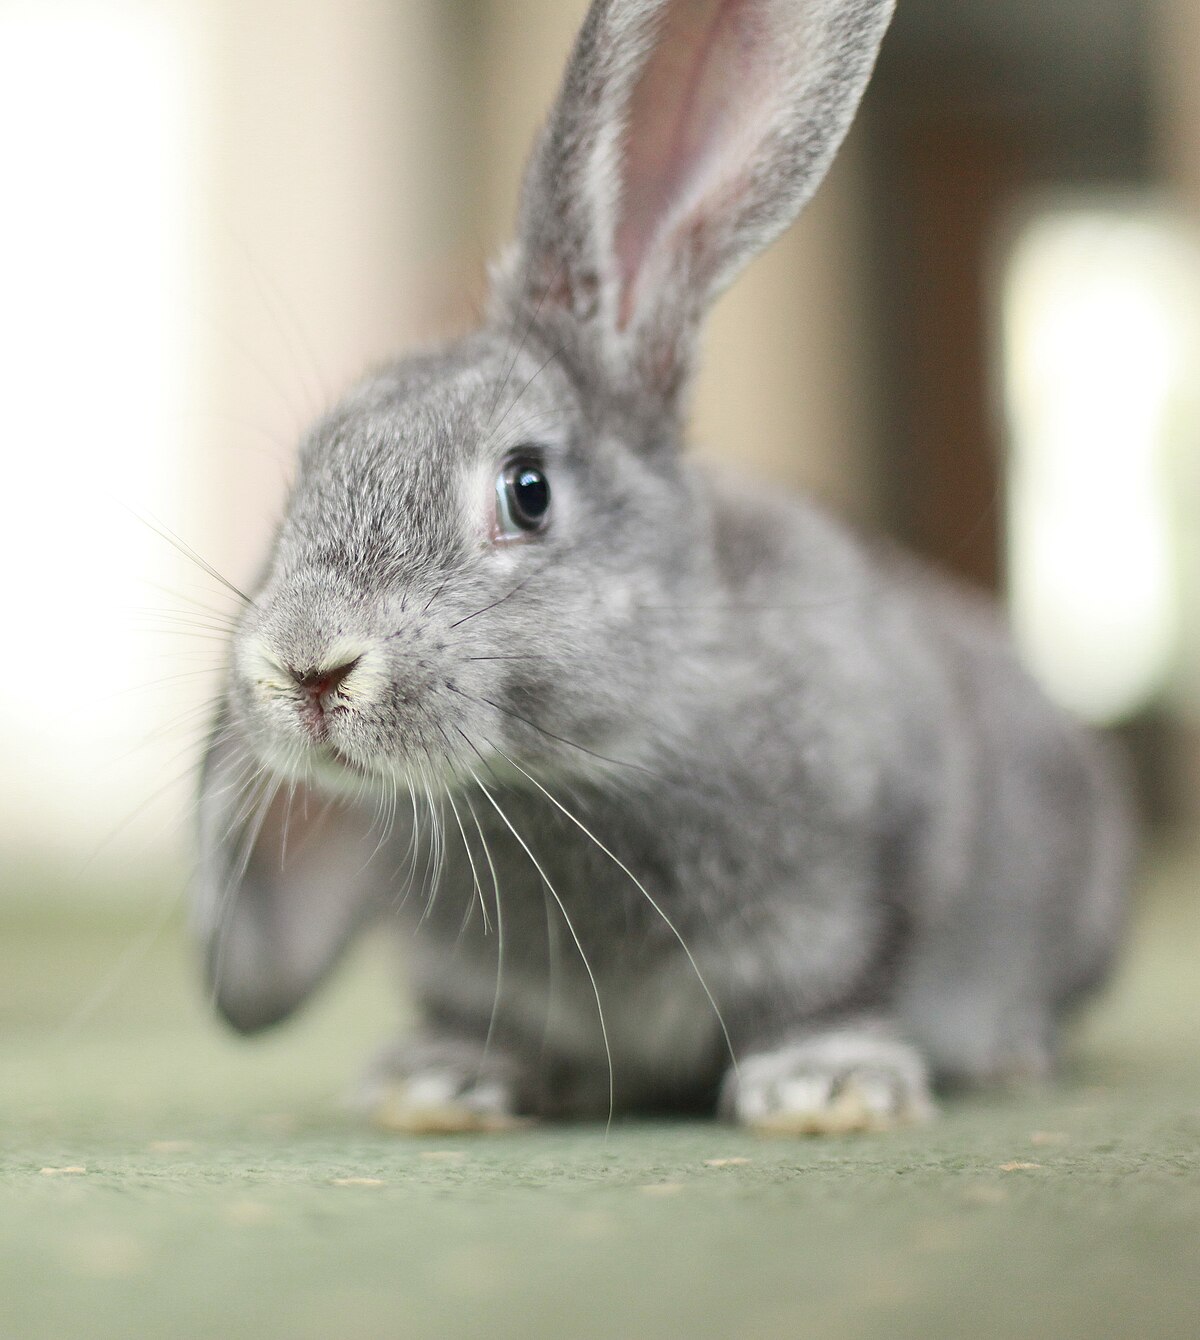 File:Bunny ears (5767988014).jpg - Wikimedia Commons